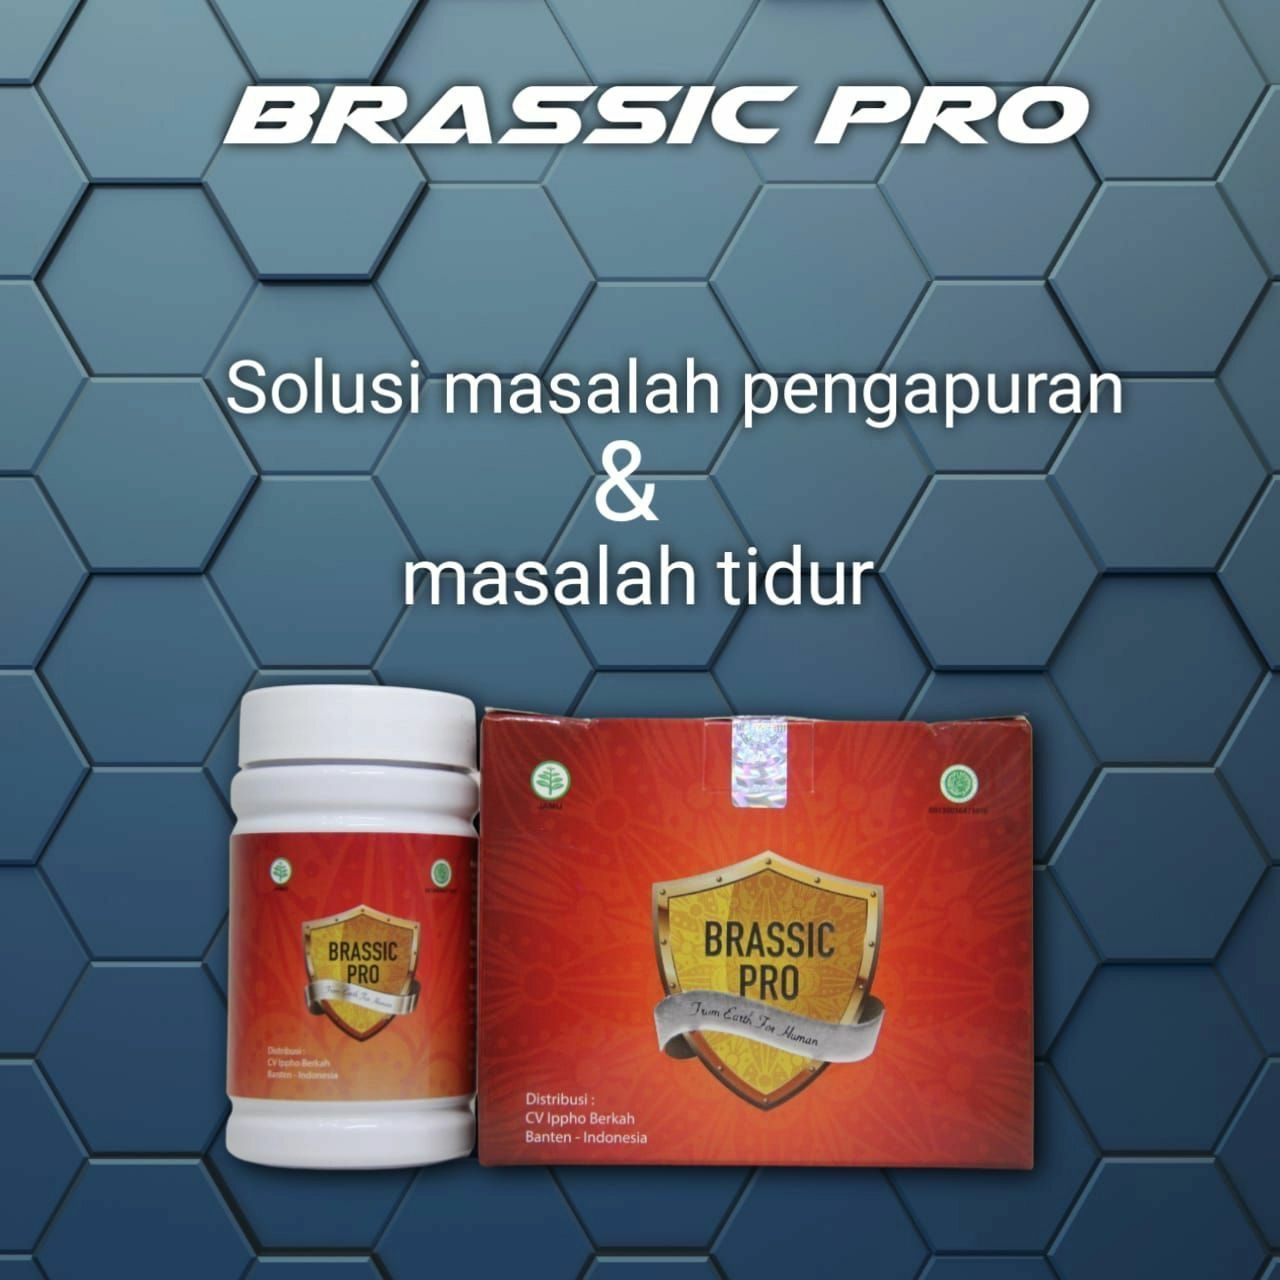 Jual Brassic Pro BP Obat Herbal di Jakarta